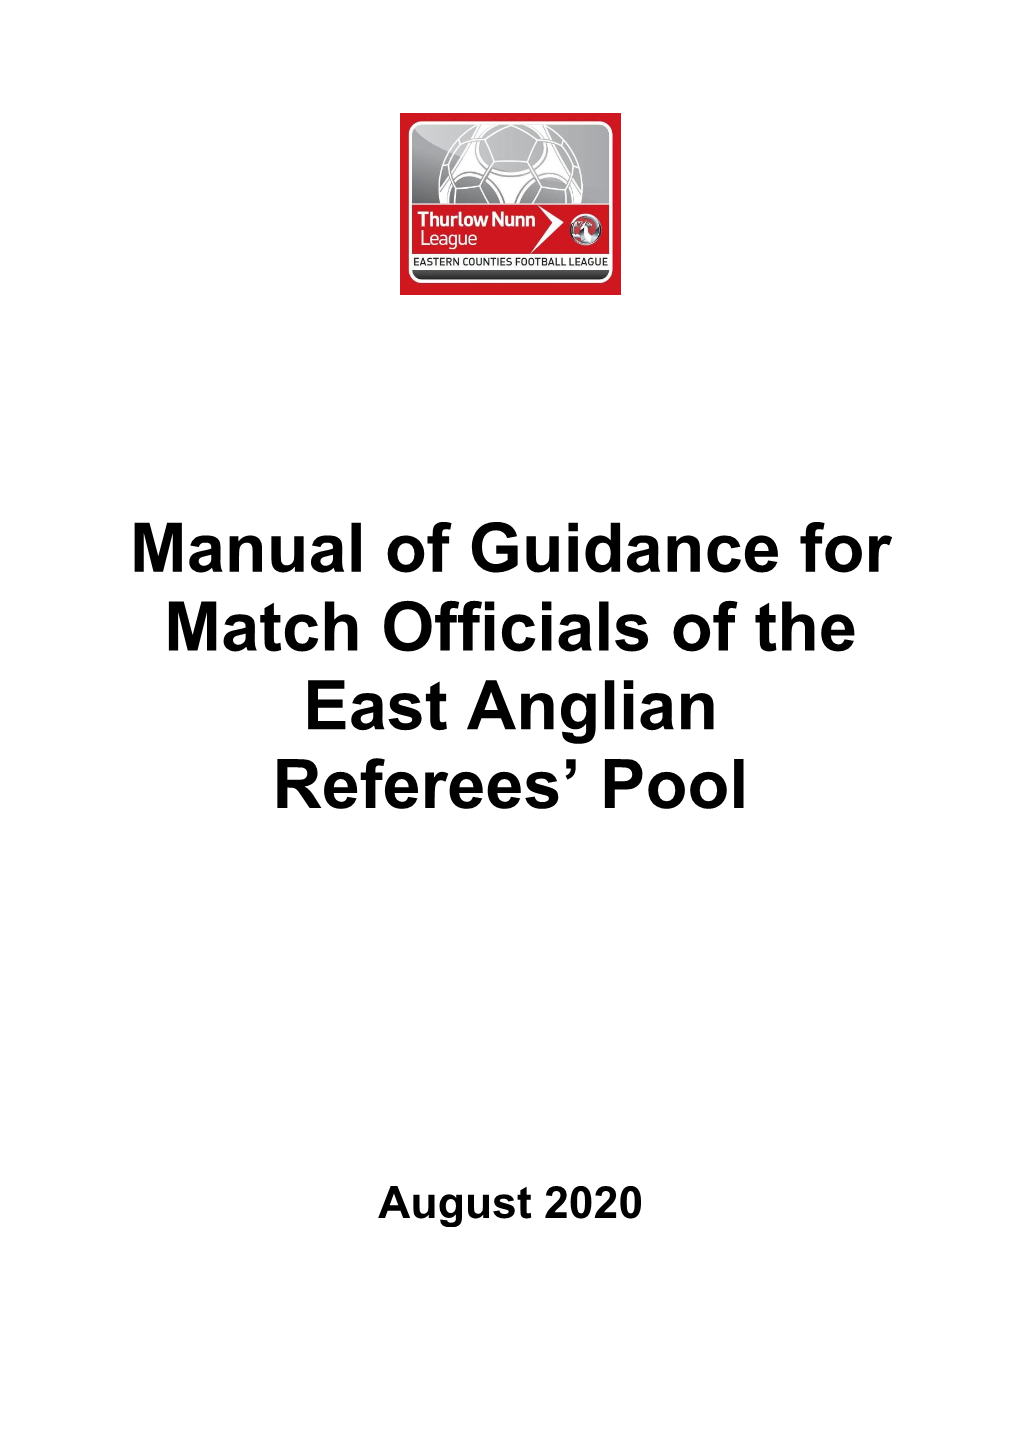 East Anglian Referees' Pool Guidance Manual 2020-2021